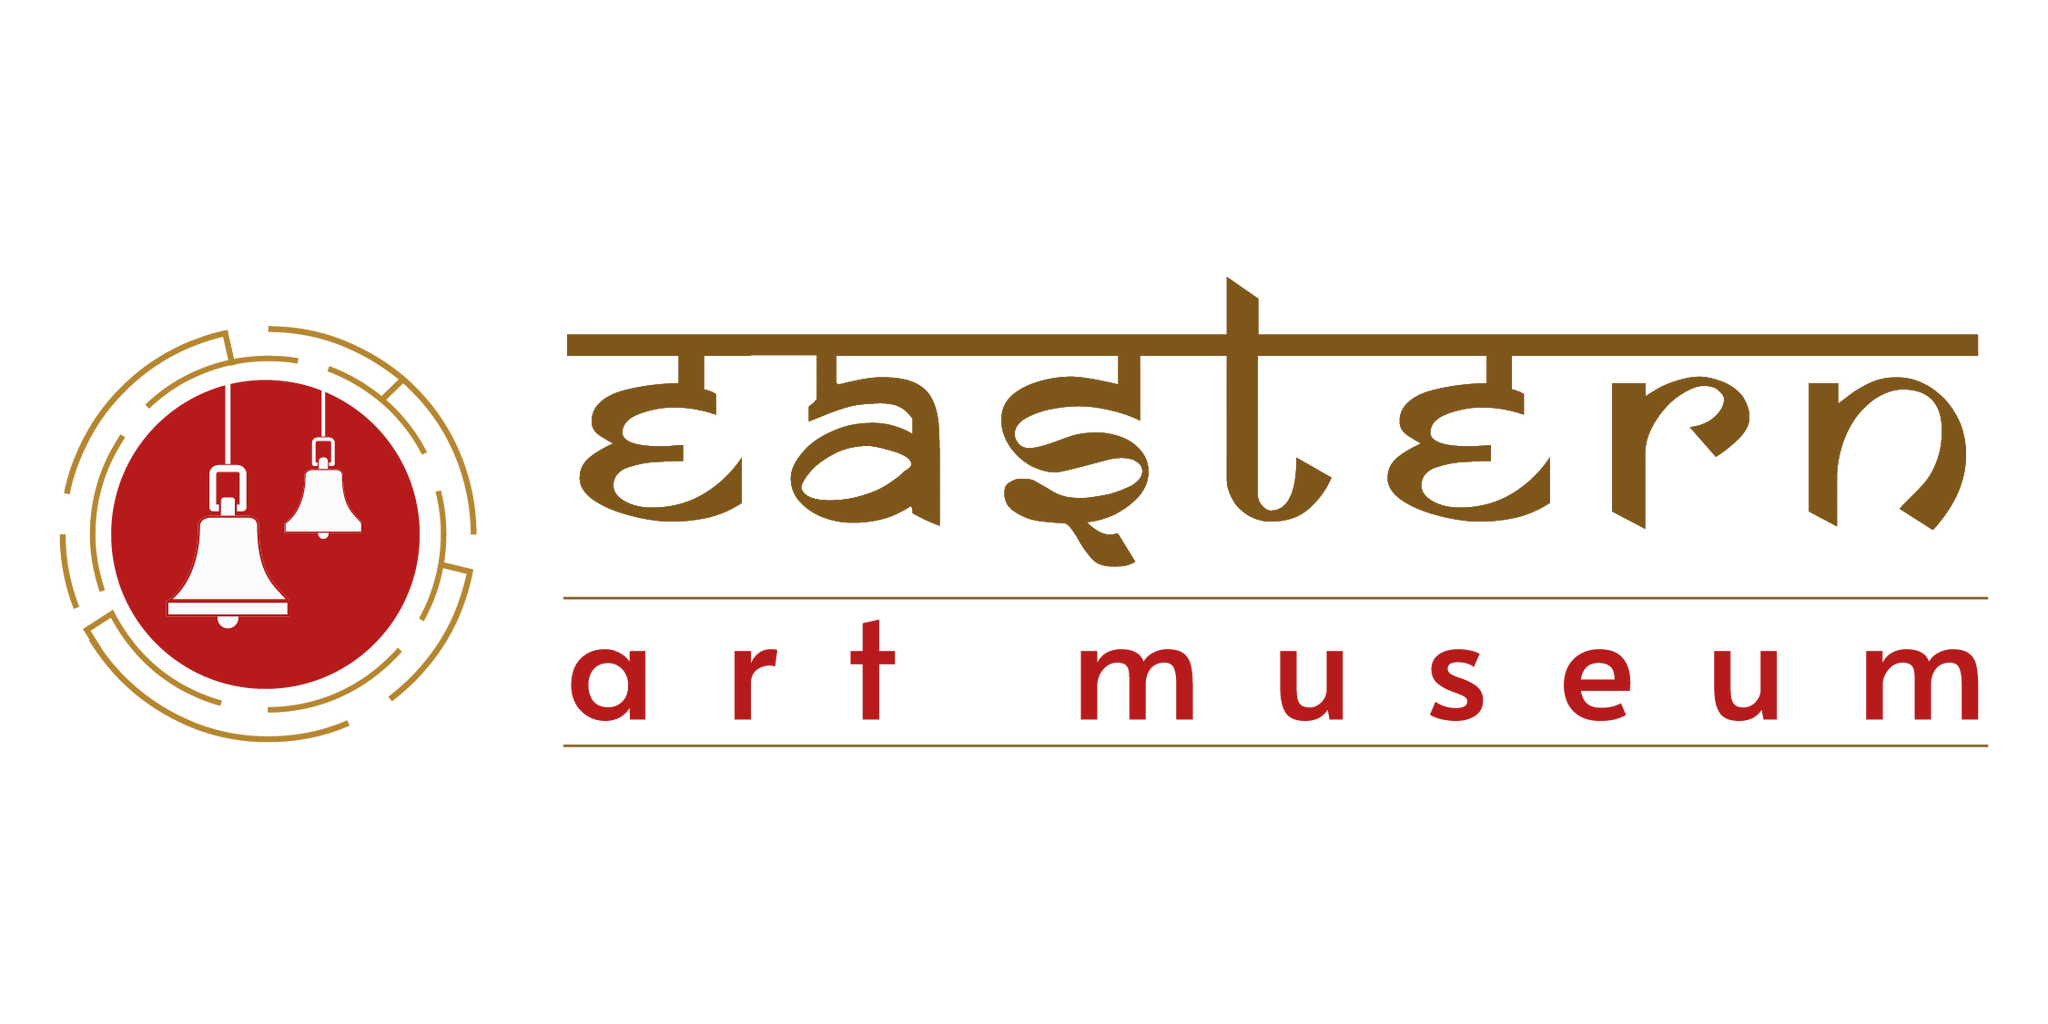 Eastern art logo